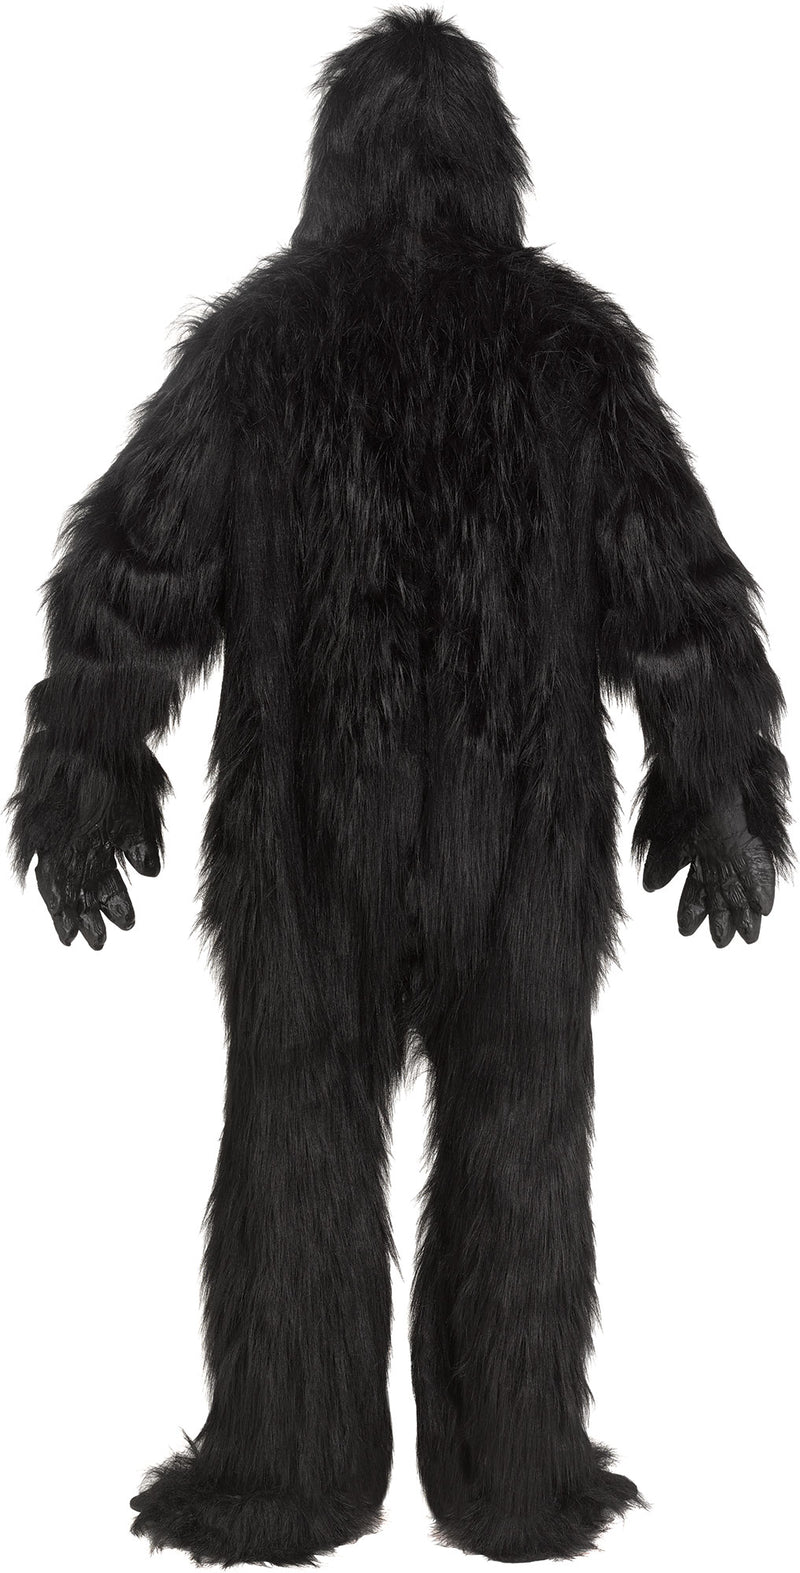 Gorilla Adult Deluxe Costume